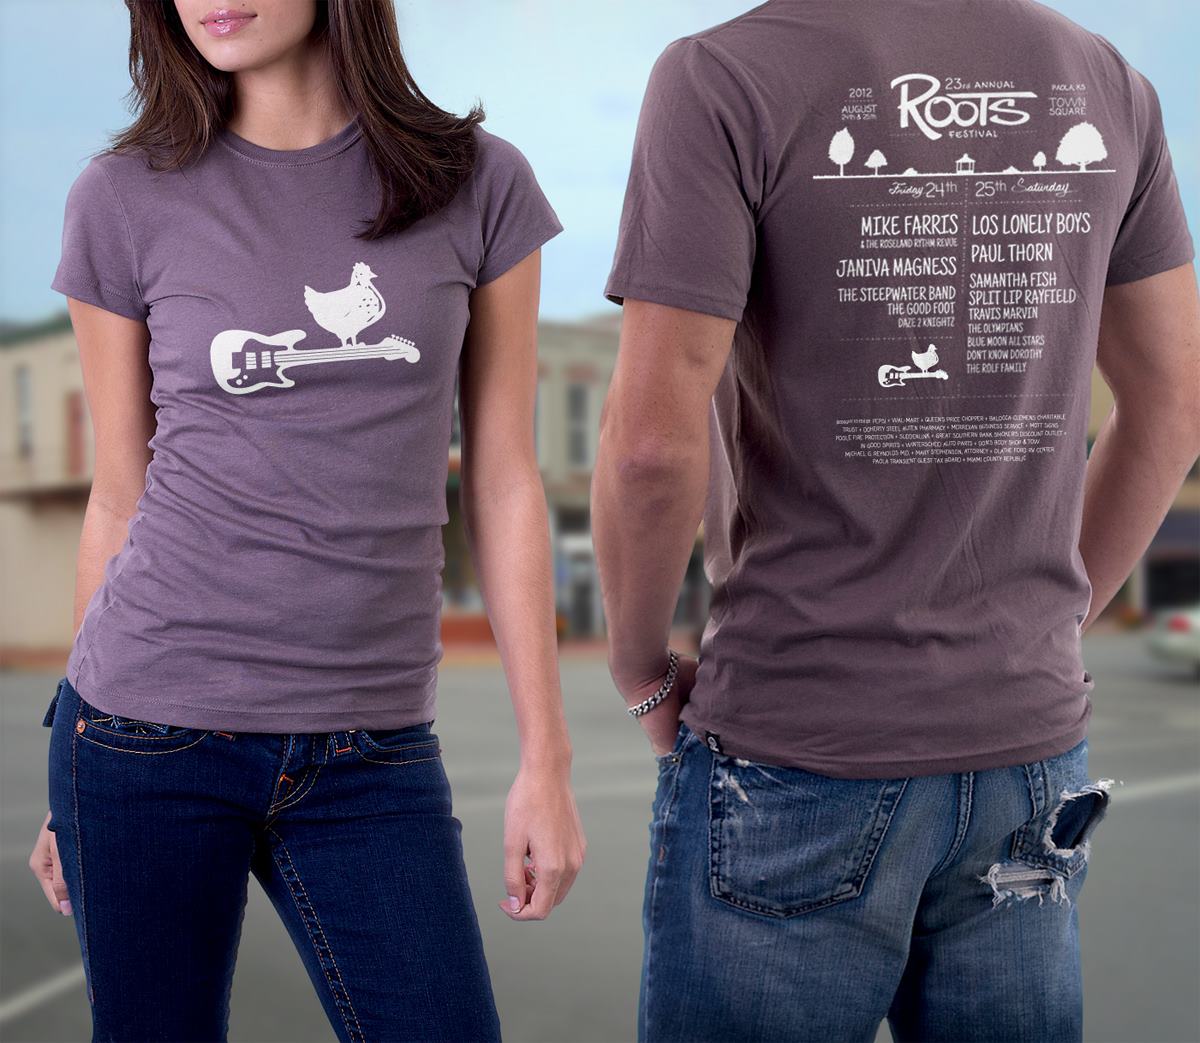 2012 Roots Festival, Custom T-shirt Designs